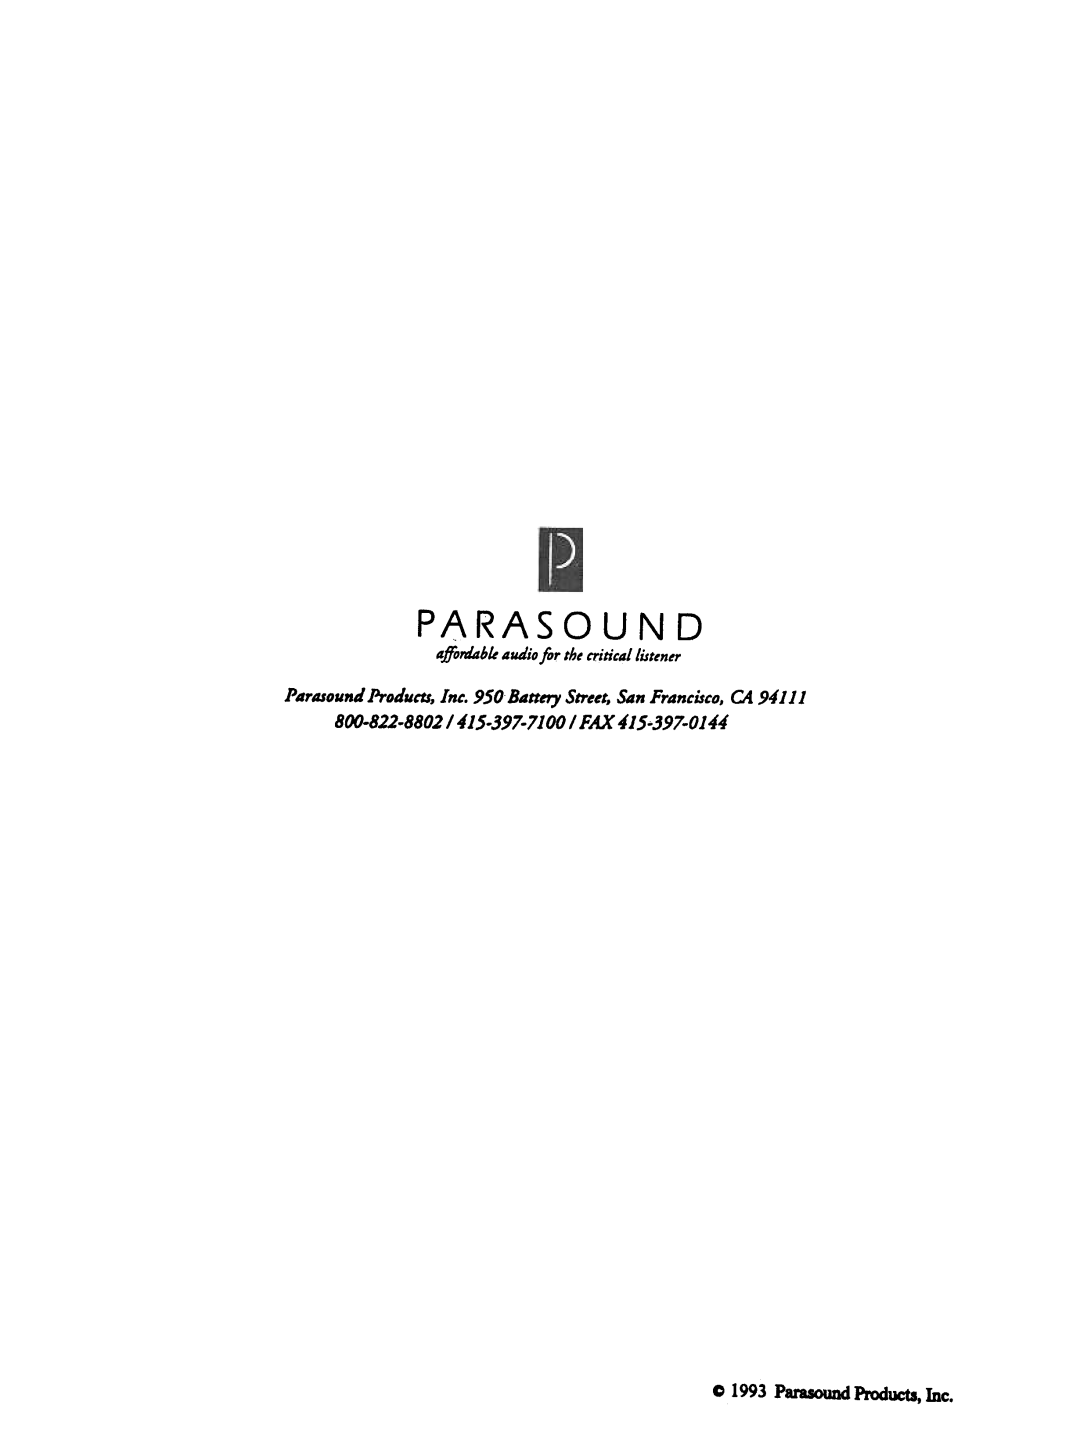 Parasound D/AC-800 manual C 1993 ParasoundProducts,Inc, affordableaudiofortht criticallistmtr 